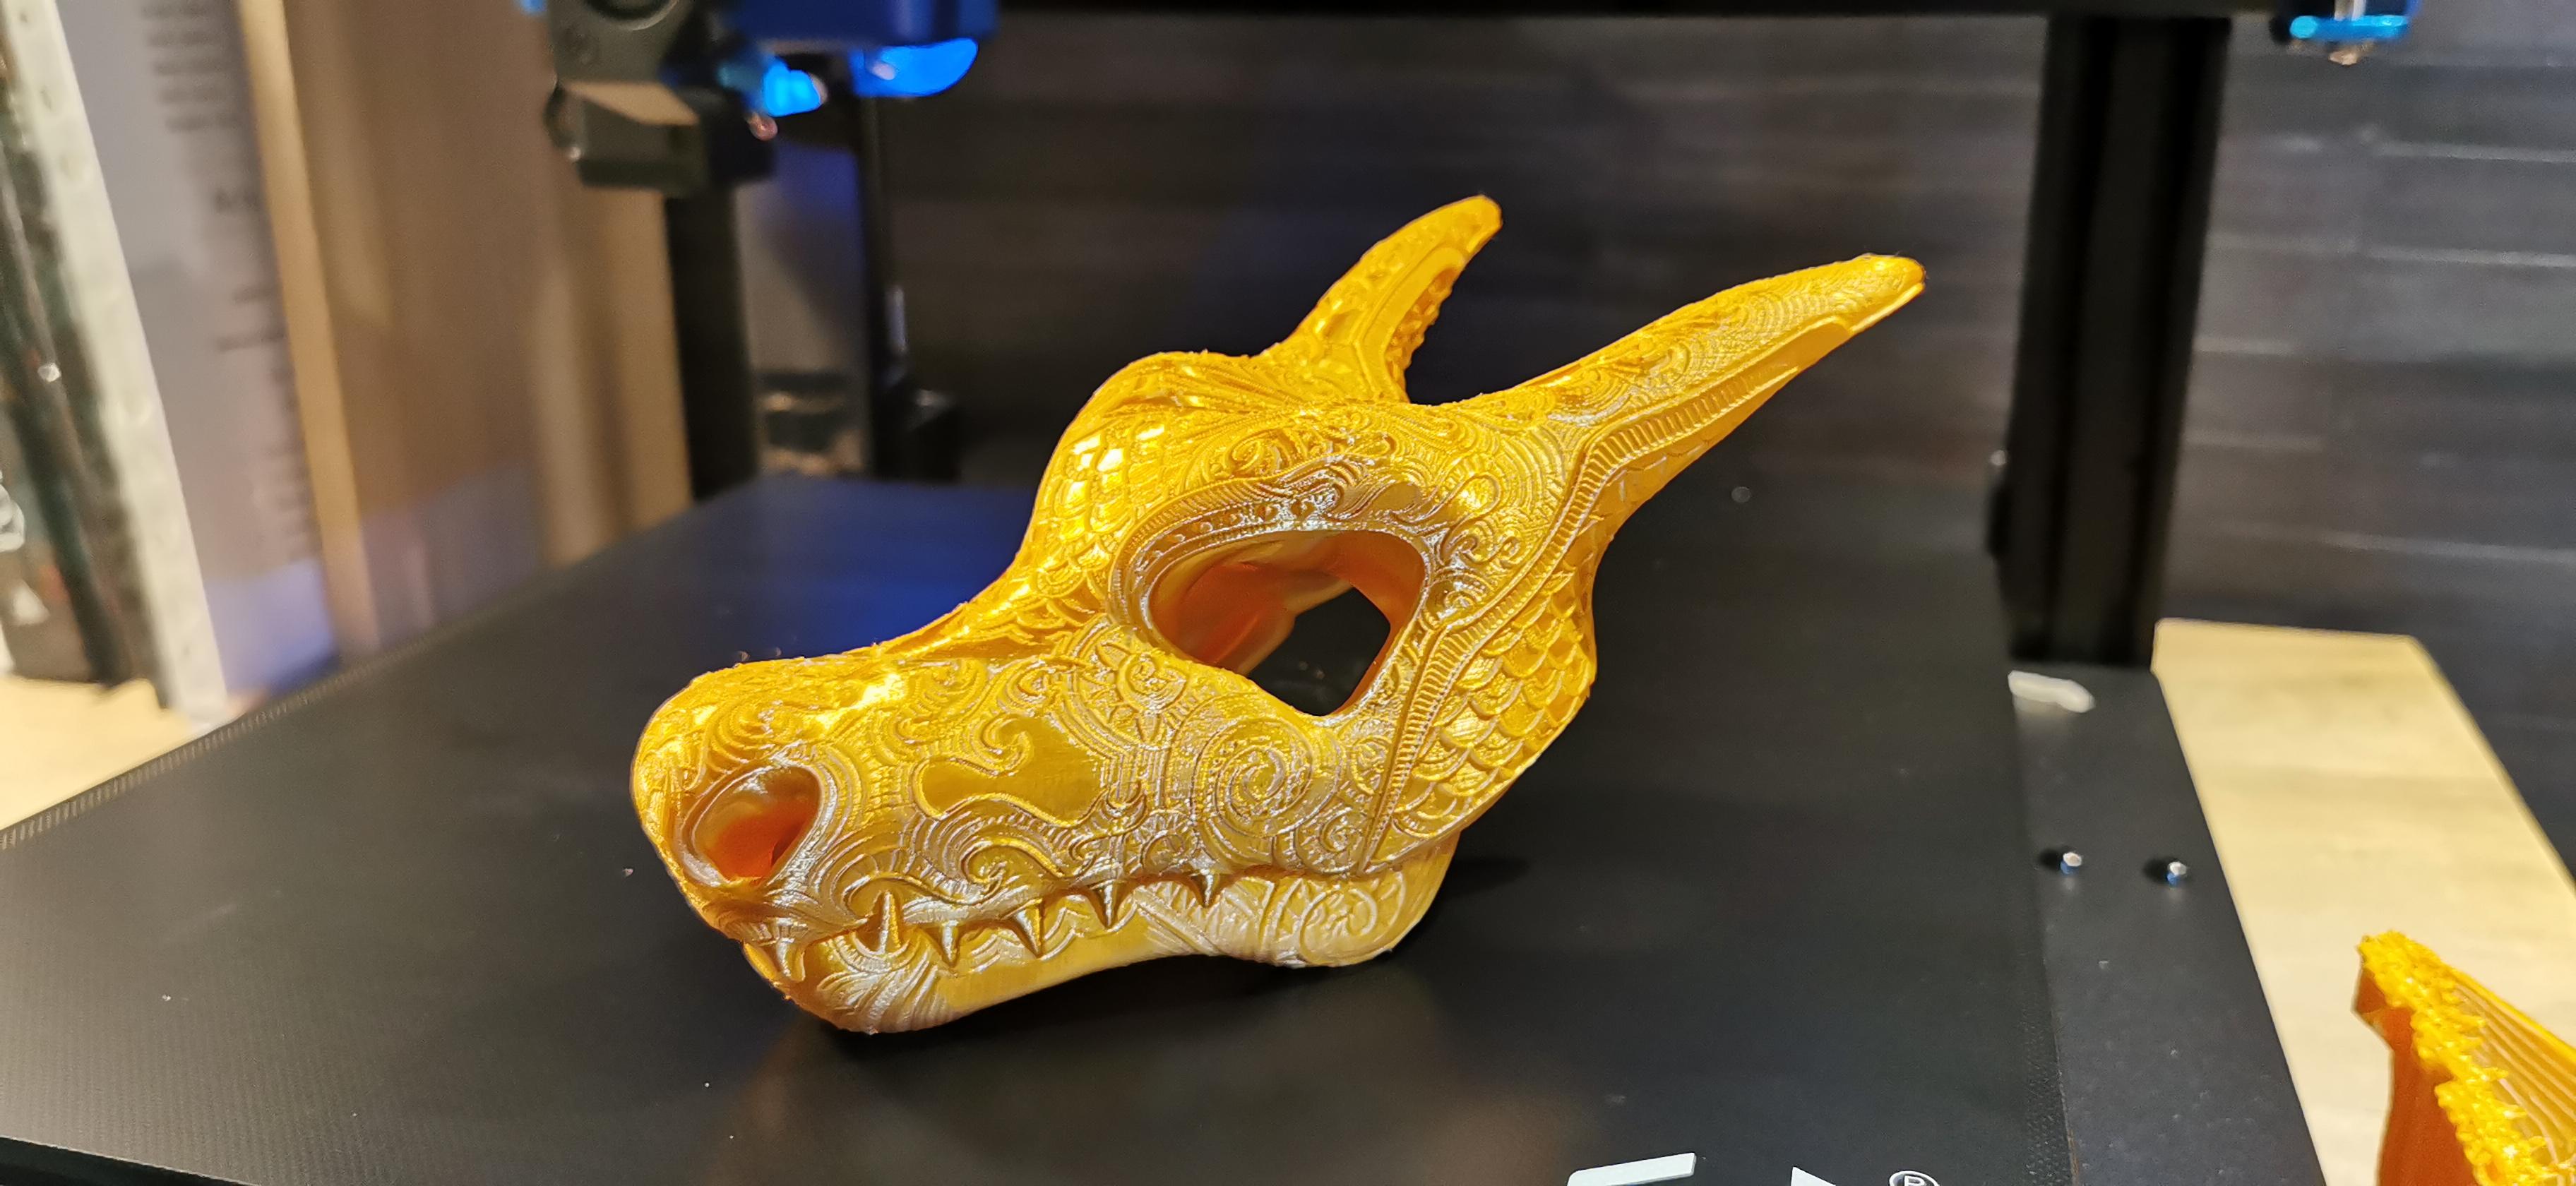 Ornate Charizard Skull (Pokémon) - Artillery Sidewinder X2, 0.16mm layer height, 4 walls, 15% infill cubic, 60mm/s, tree support (5% density), skirt.

Azurefilm Silk orange flame, great render ! - 3d model